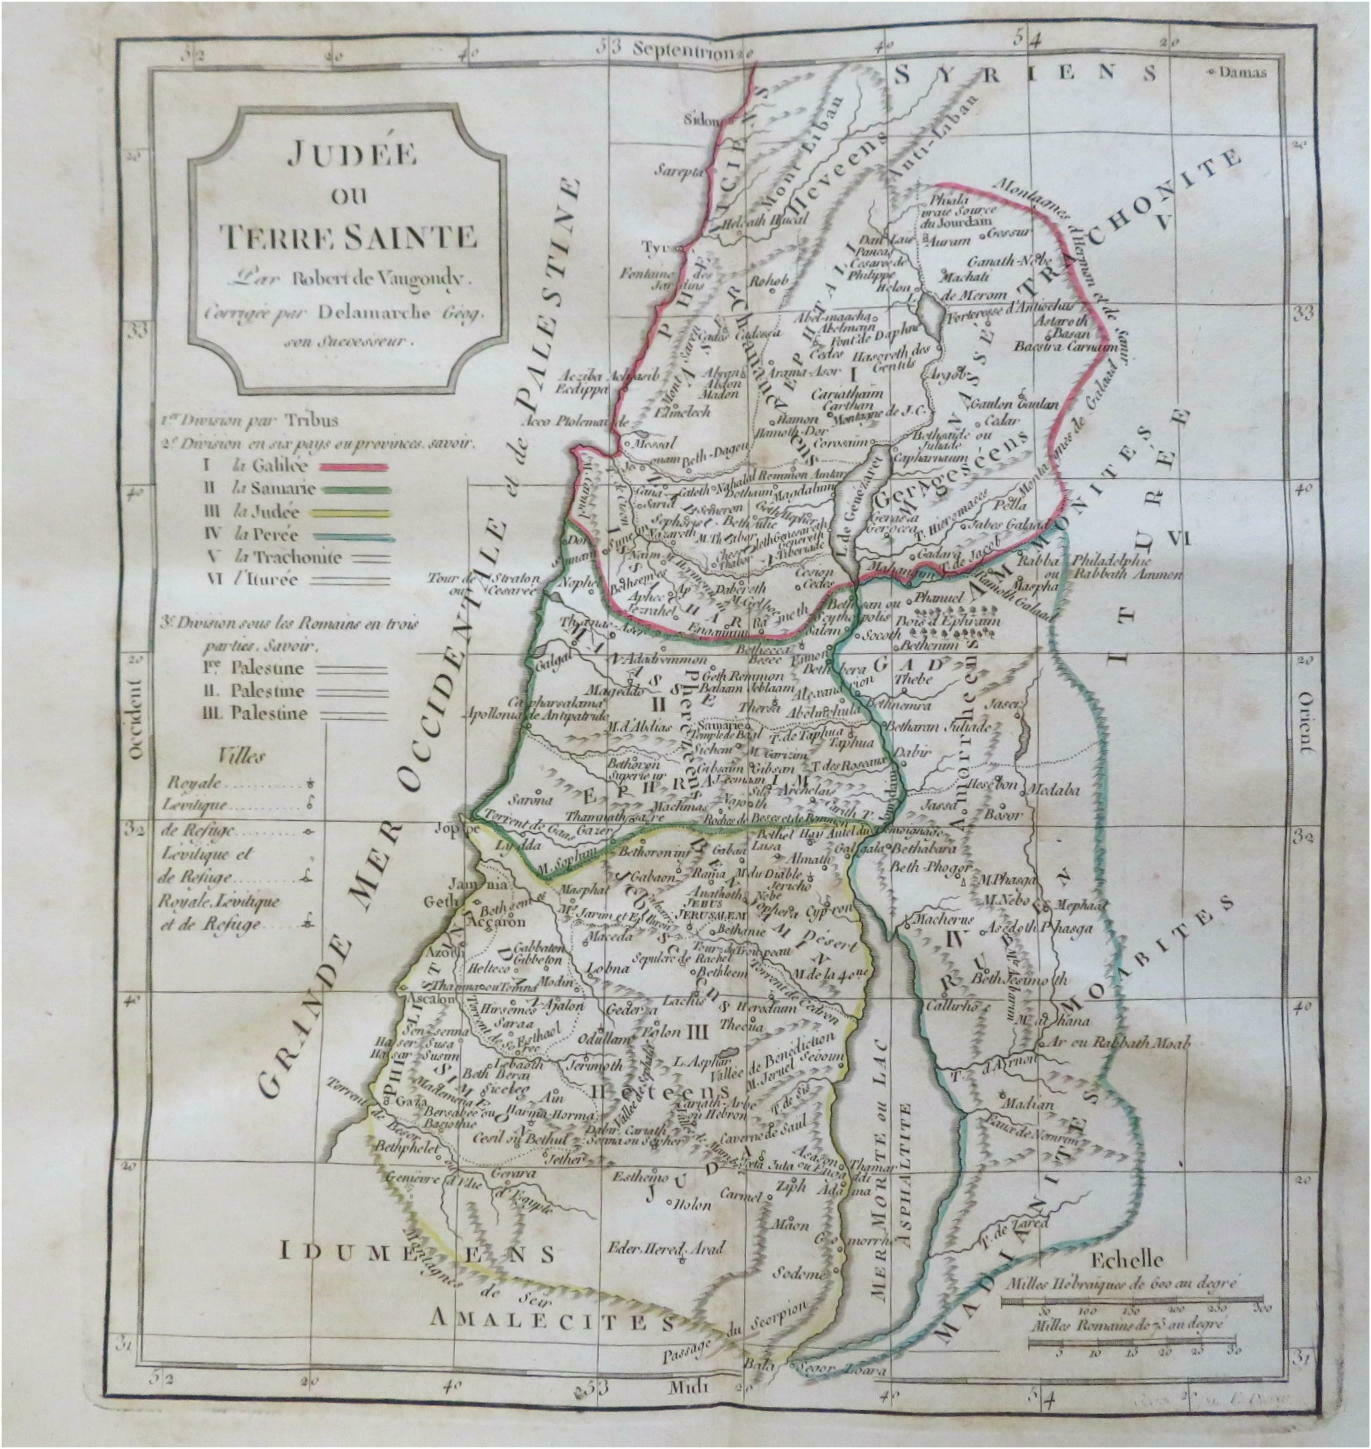 Holy Land Israel Palestine Judea C 1795 1806 Vaugondy Delamarche